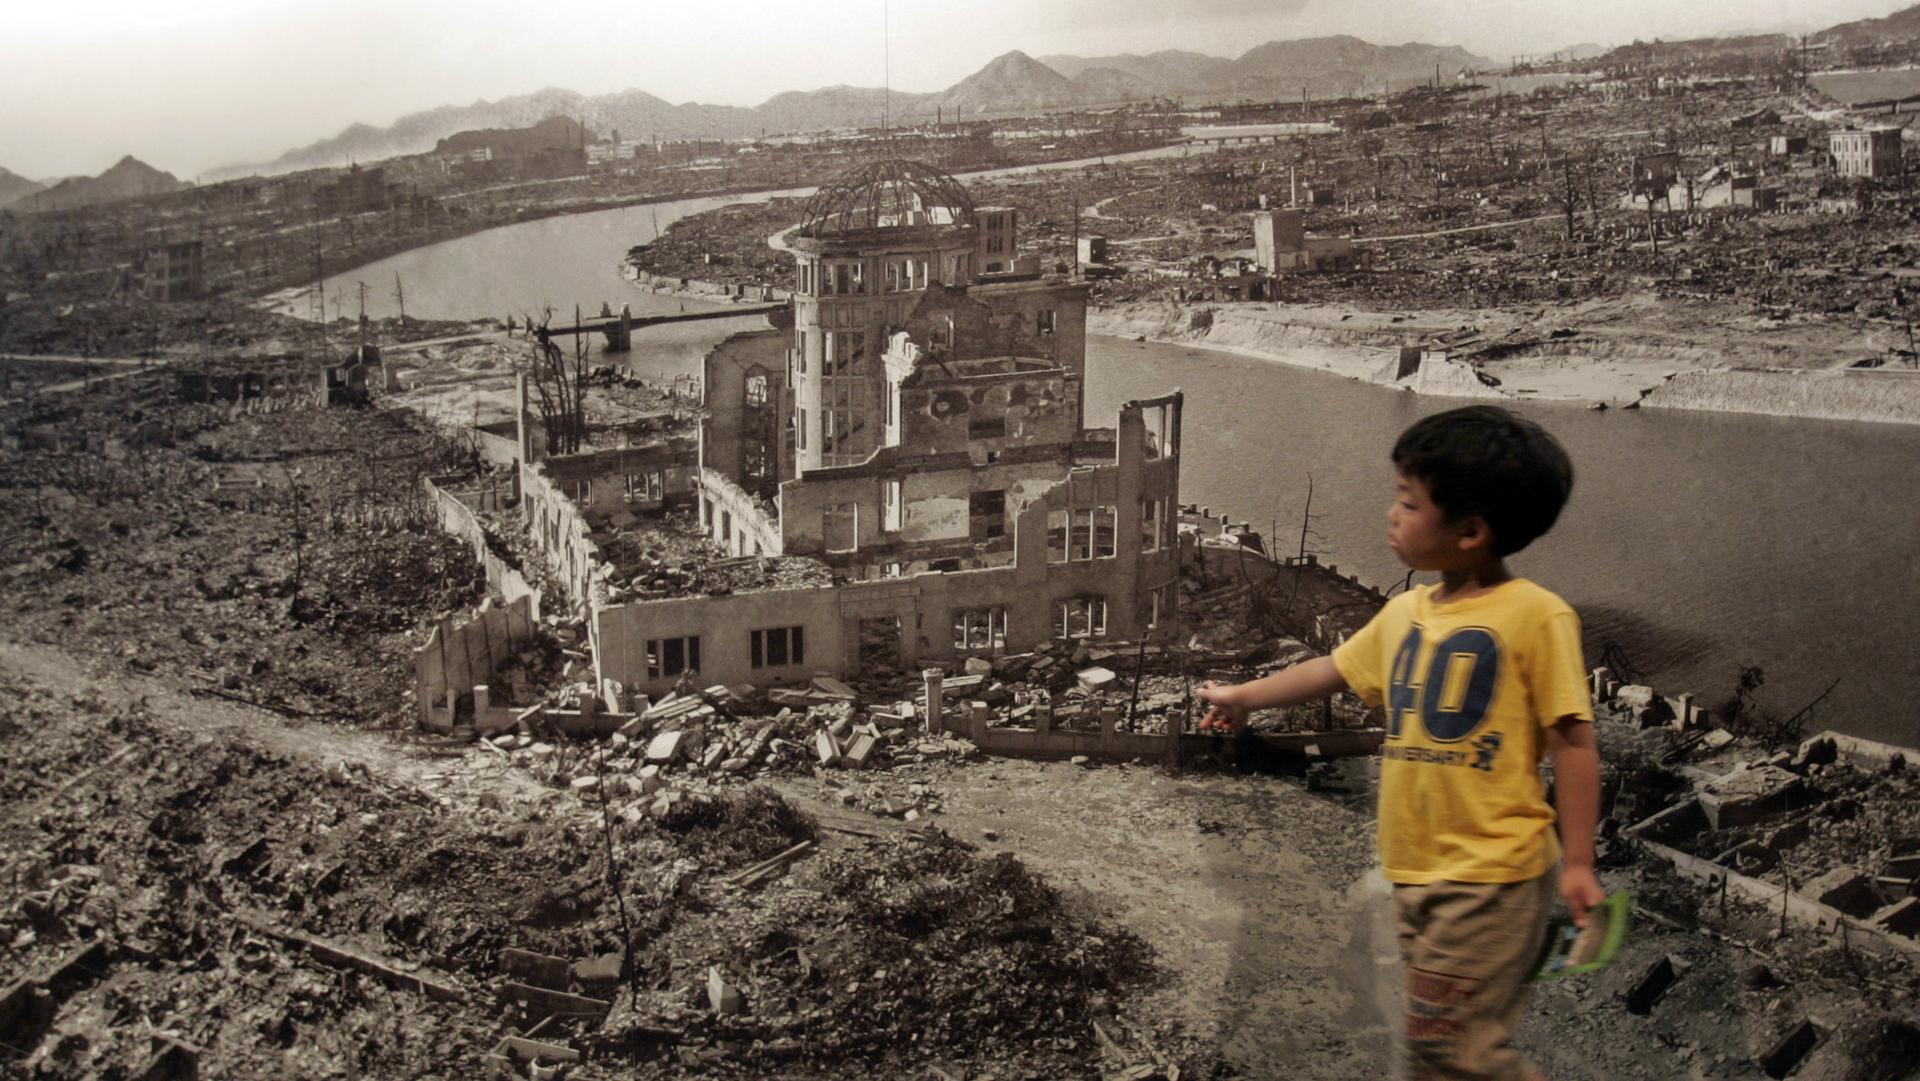 A boy looks at a photograph showing Hiroshima city after the 1945 atomic bombing, at the Hiroshima Peace Memorial Museum, Japan, Aug. 6, 2007.